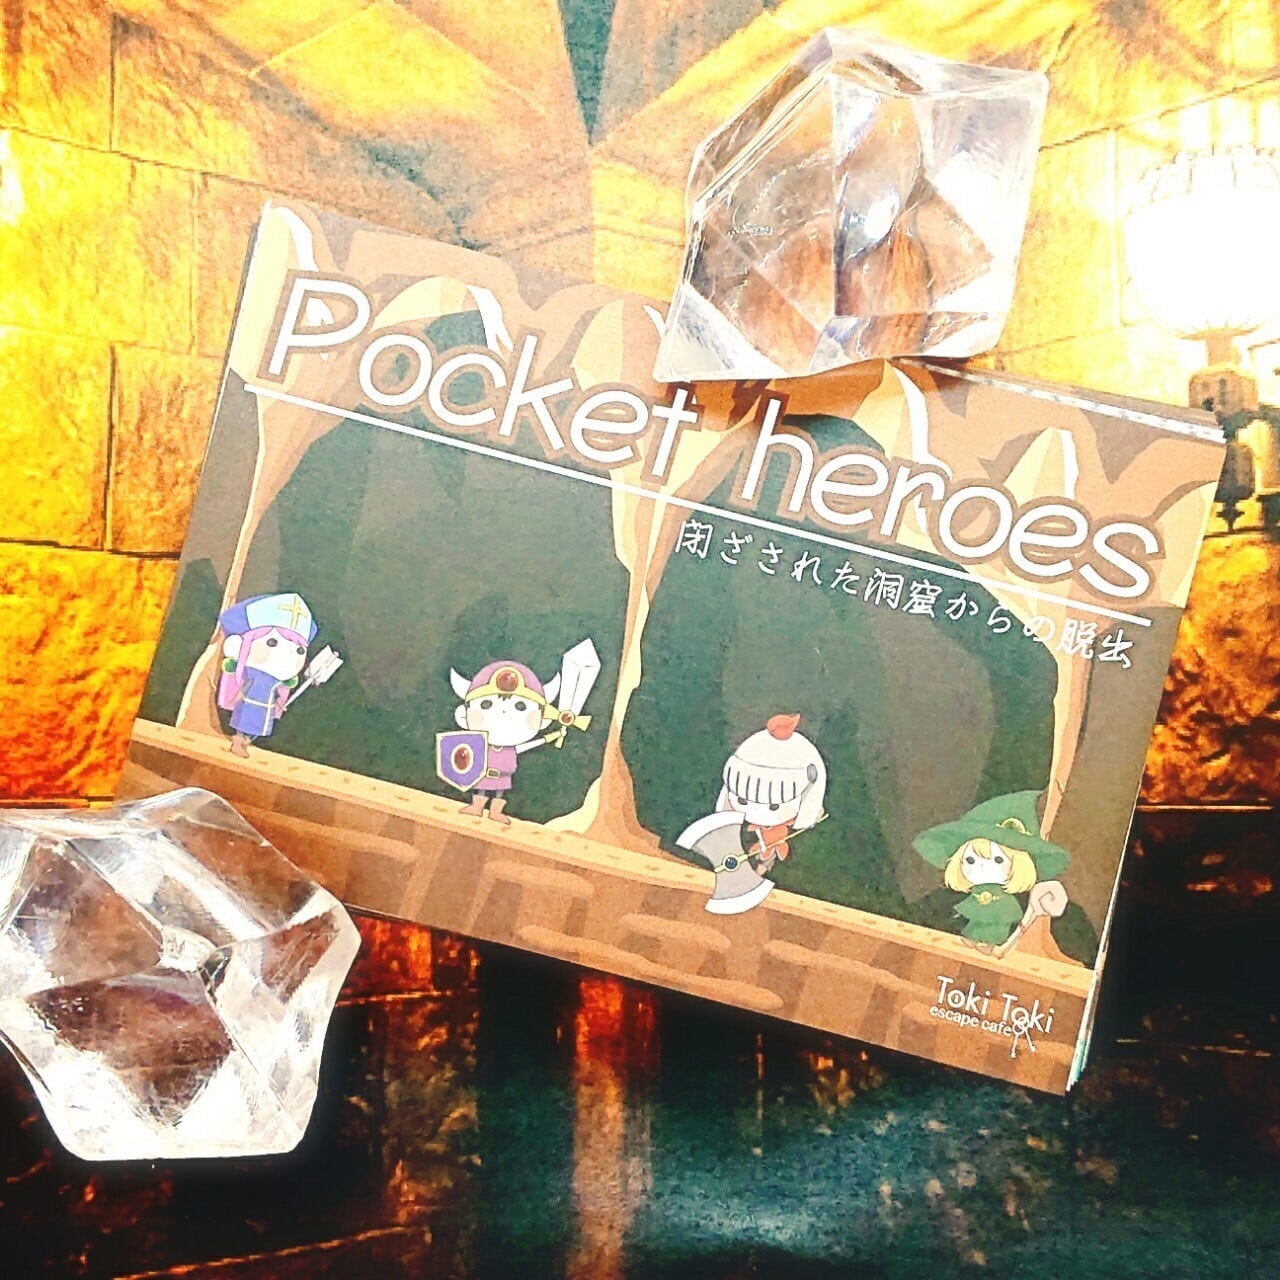 Pocket  heroes ポケットヒーローズ『閉ざされた洞窟からの脱出』